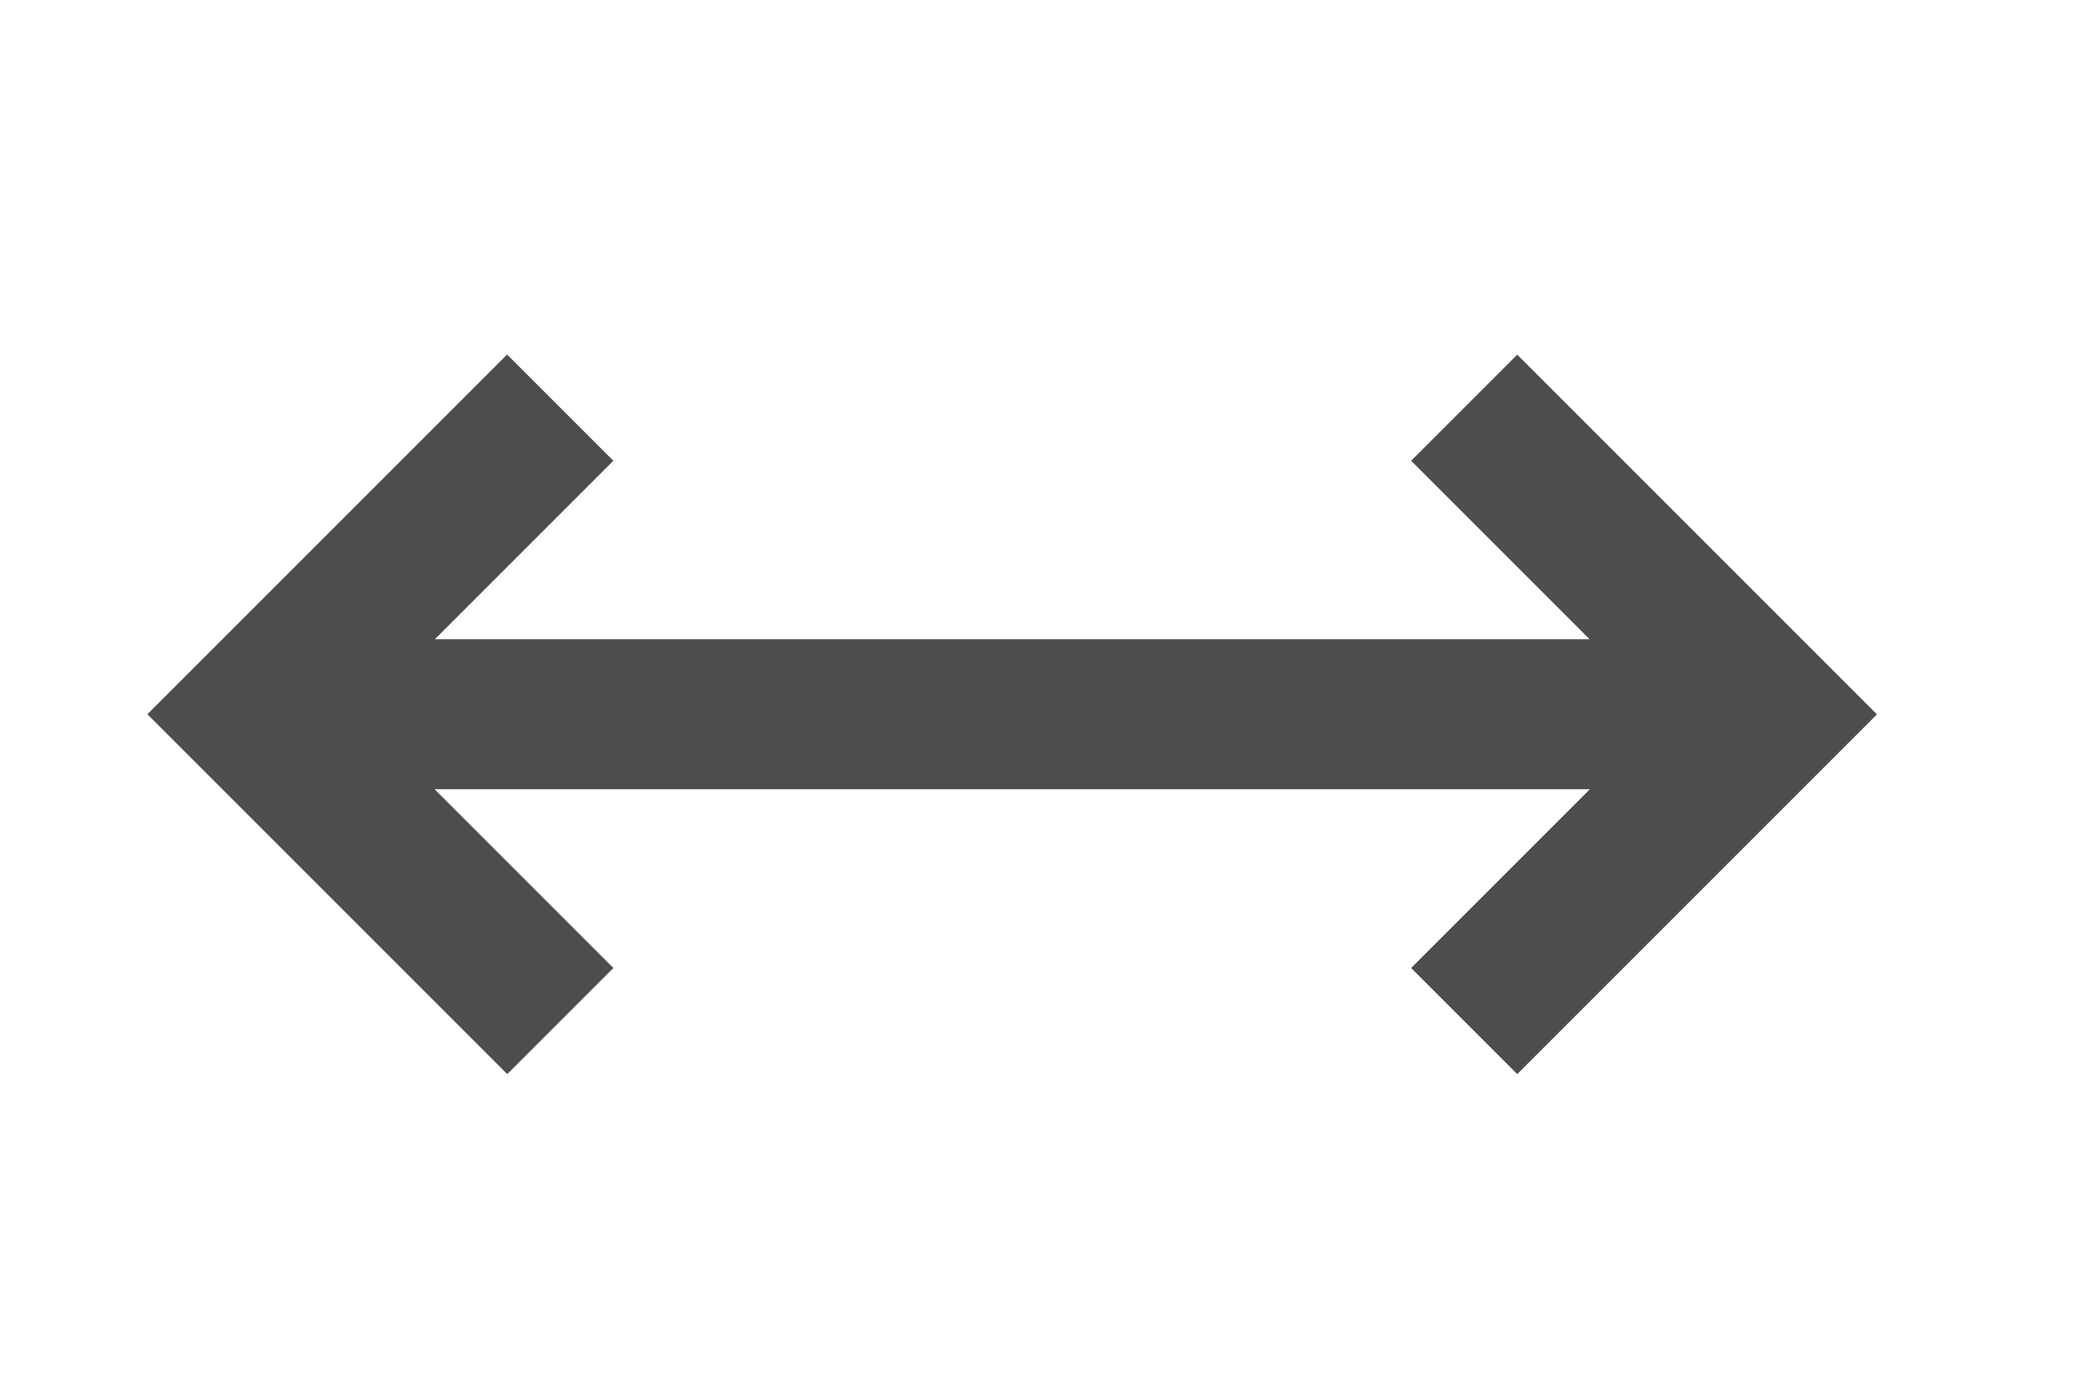 Icon set / Illustration / Communication arrow / Direction / Forward / Clip art / Vector / Beju curve / ai file / Edit